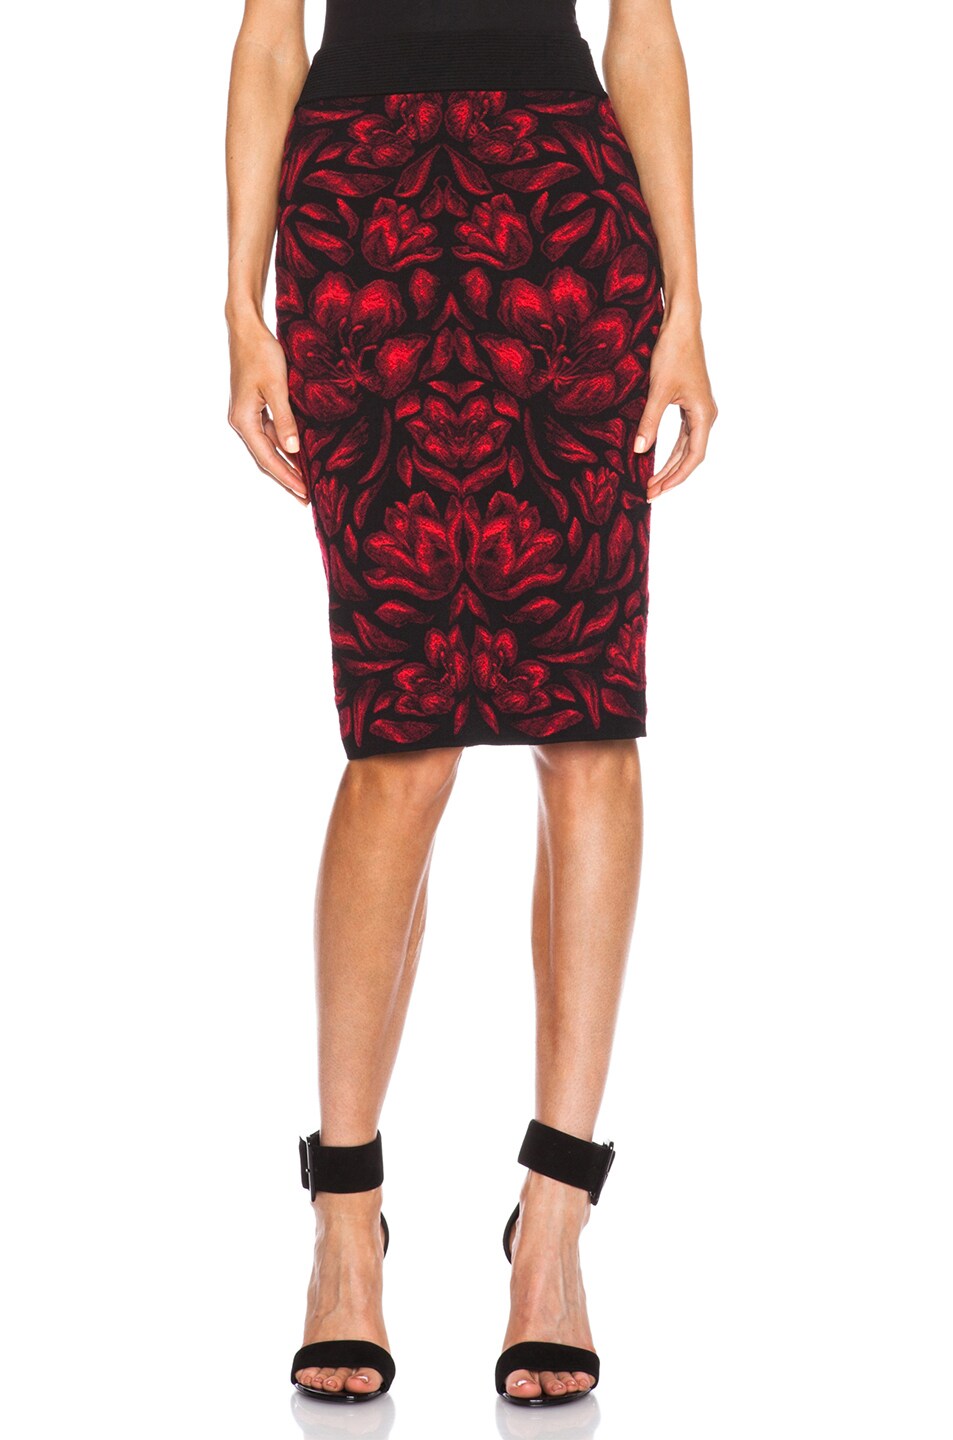 Alexander McQueen Floral Printed Mid Length Skirt in Black & Red | FWRD